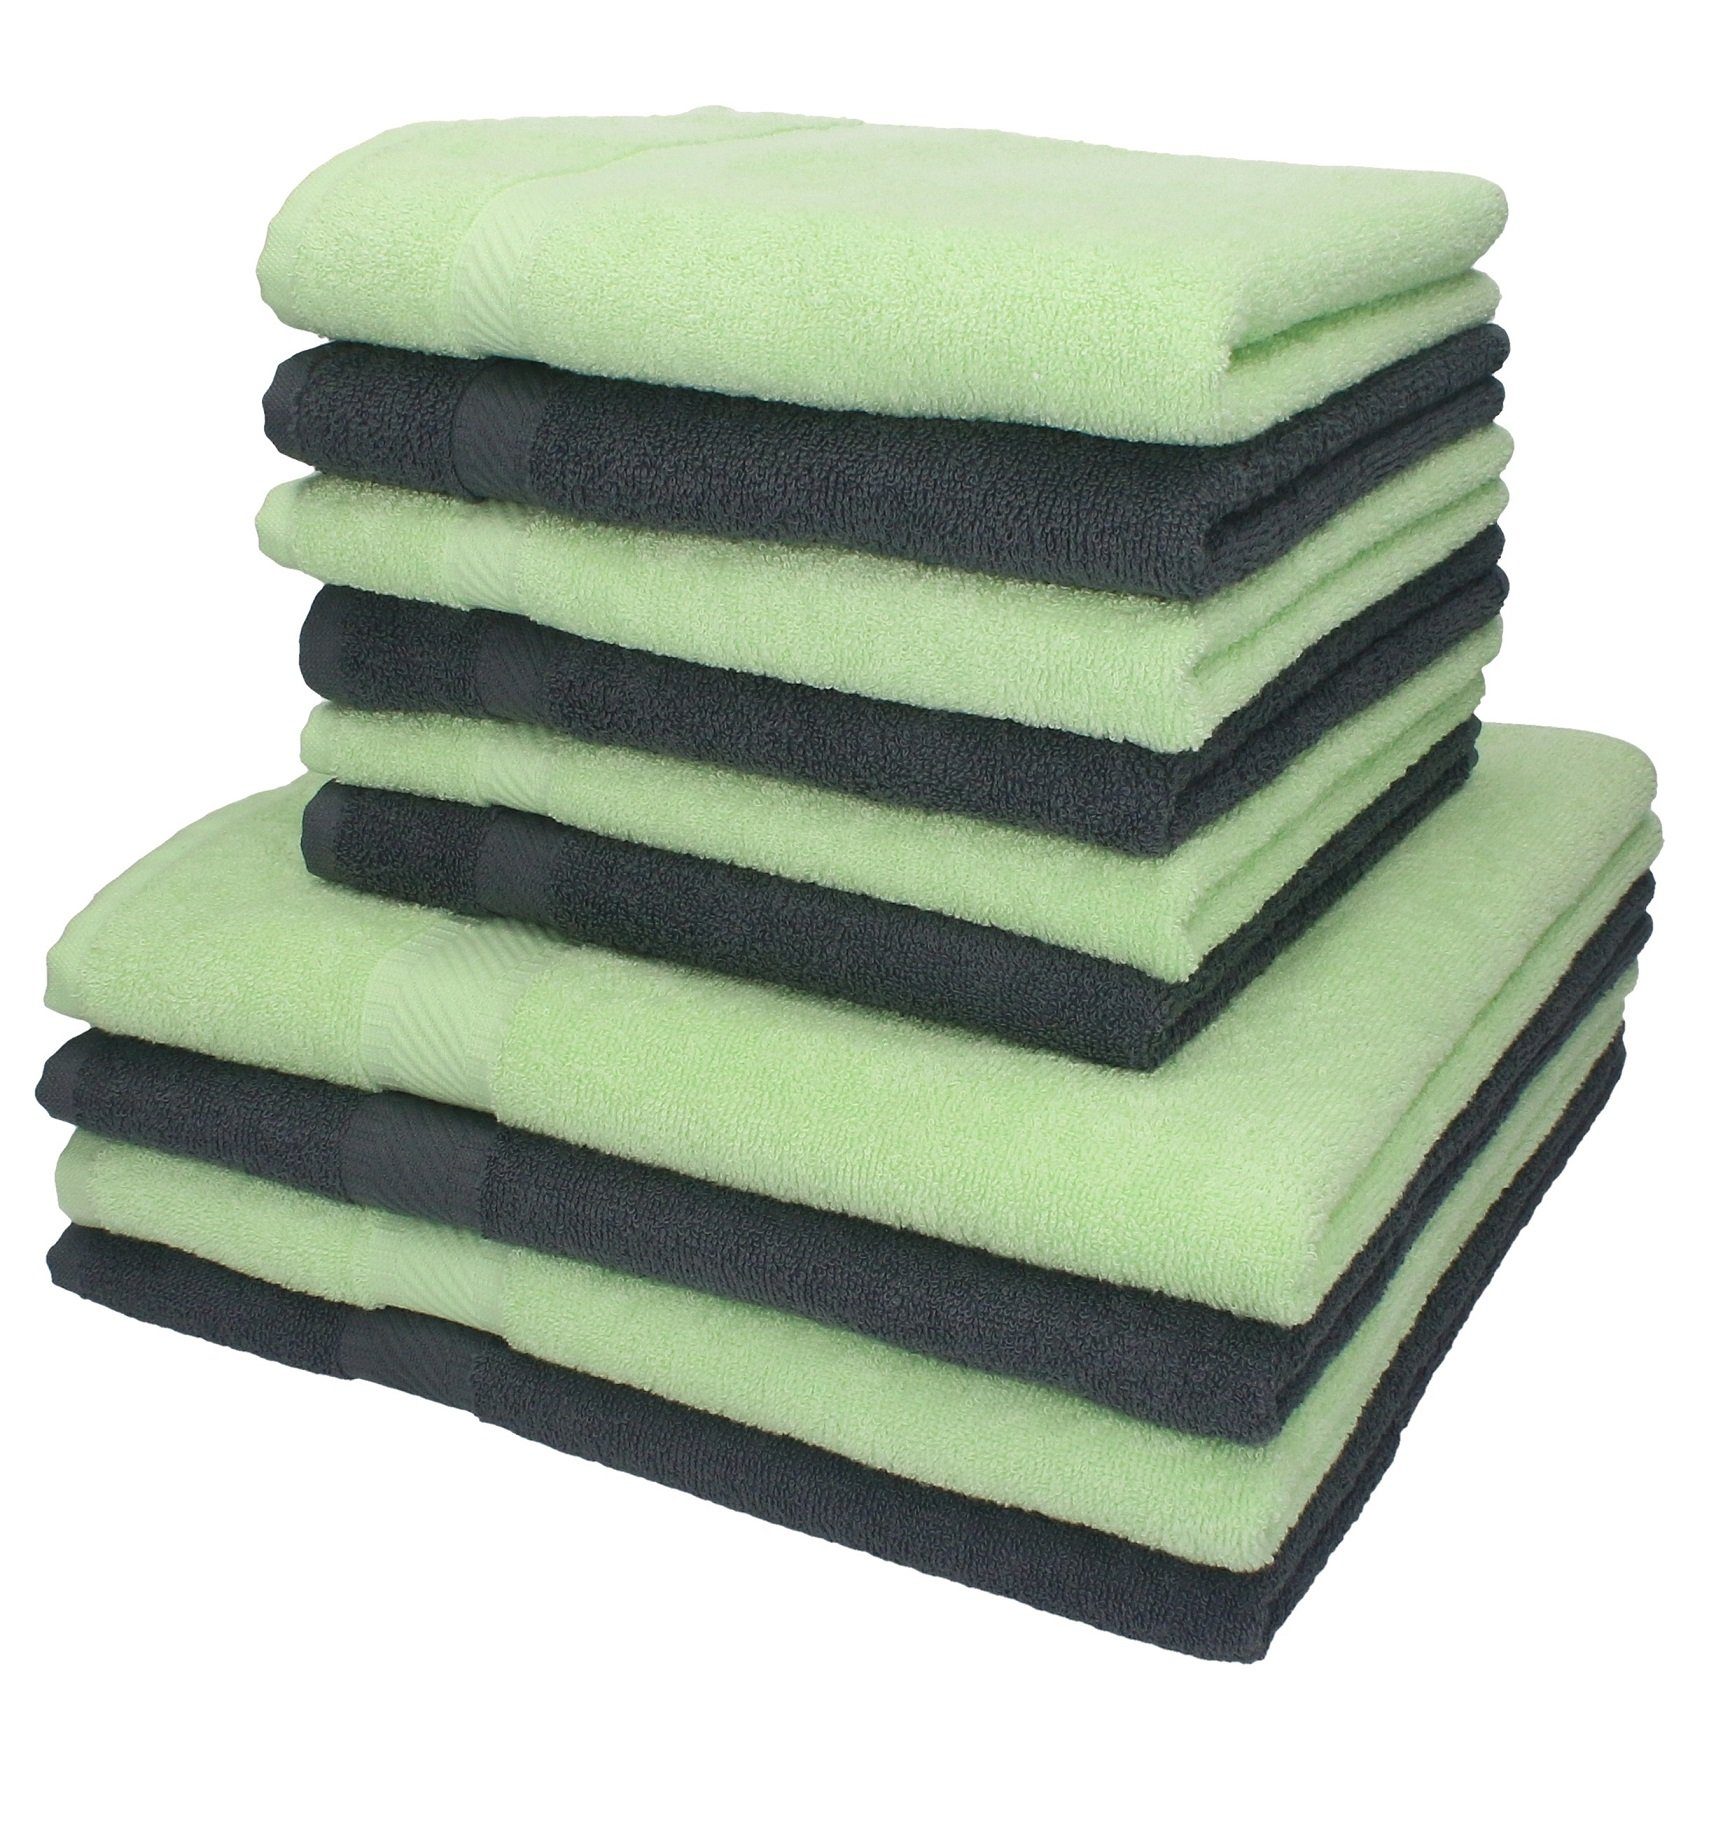 Betz Handtuch Set 10-tlg. Set Palermo 4 Duschtücher 6 Handtücher Farbe anthrazit/grün, 100% Baumwolle